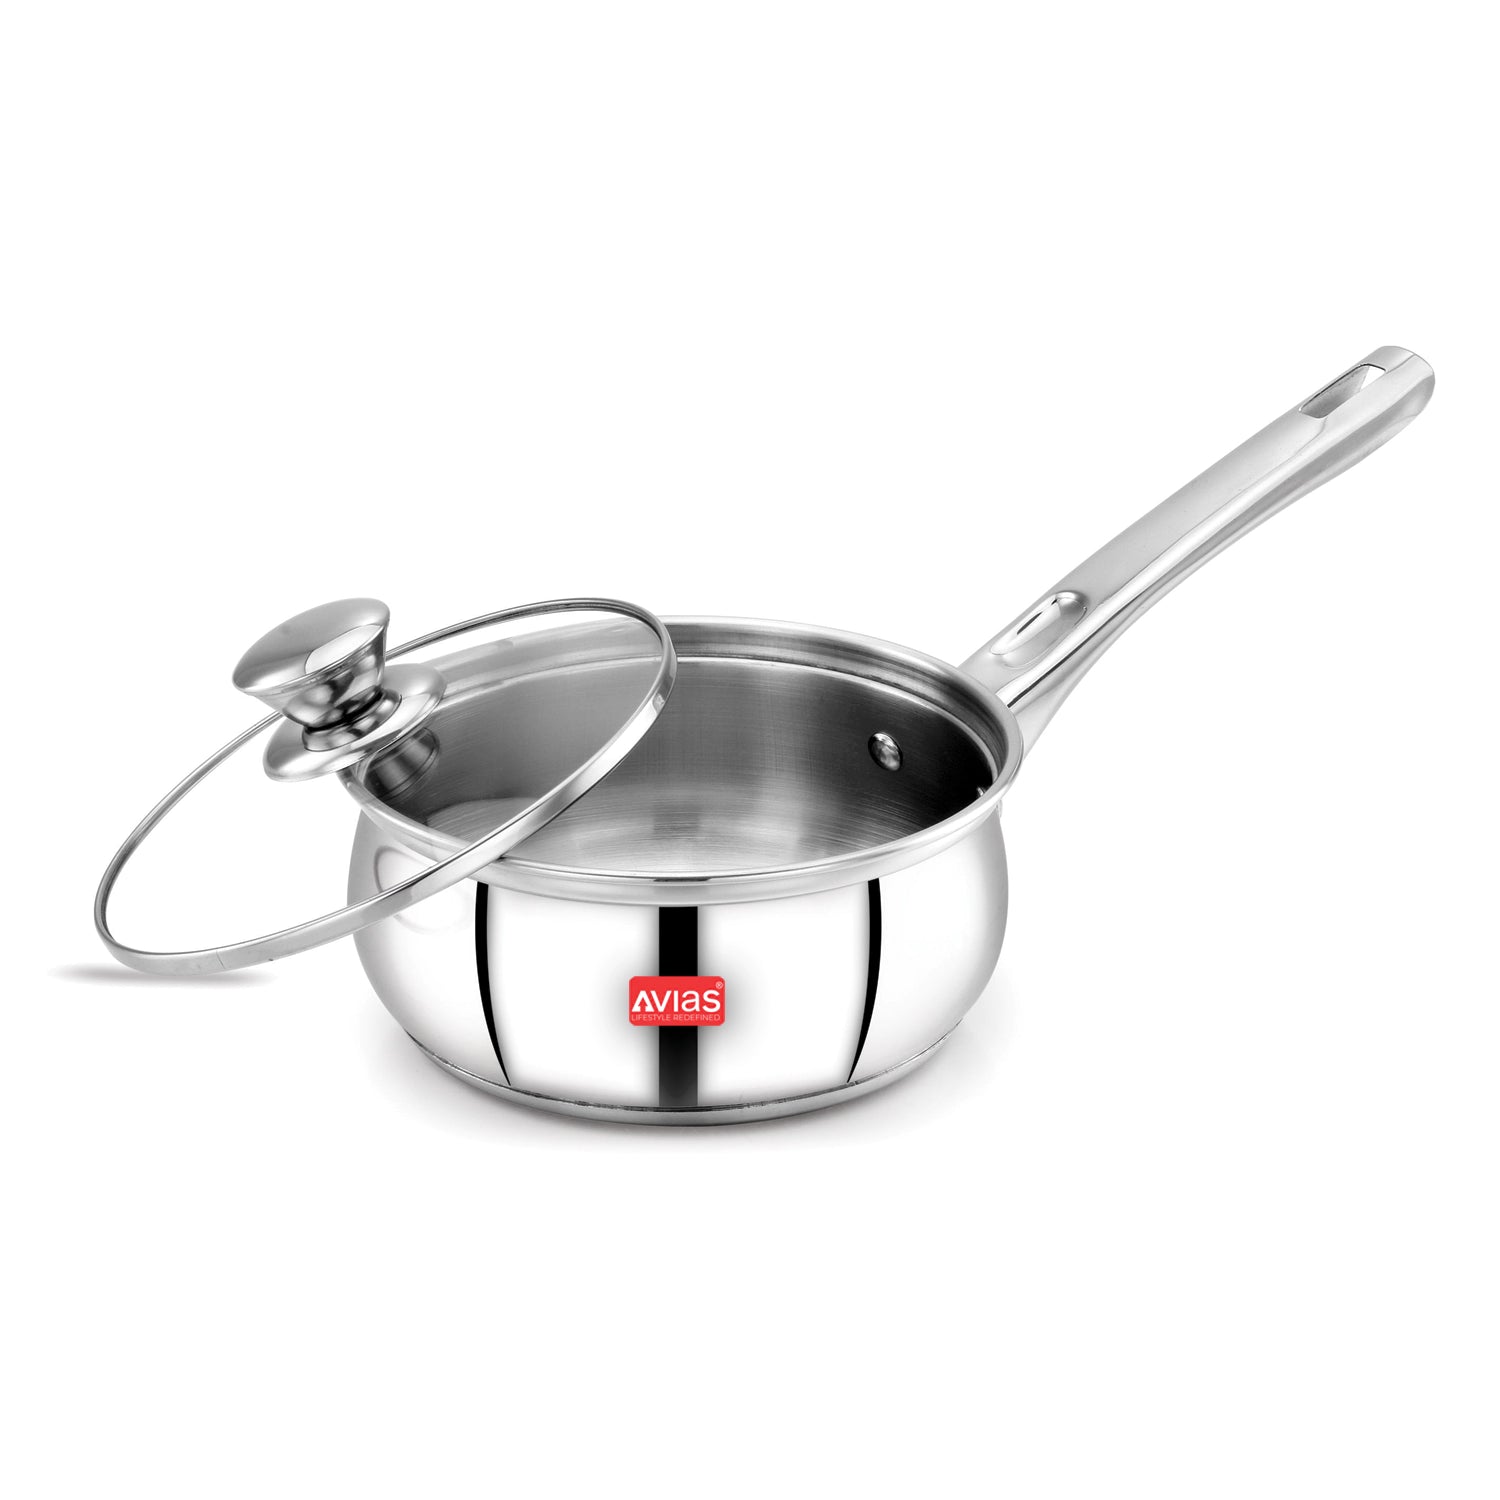 AVIAS Inox IB stainless Steel Saucepan with glass lid open